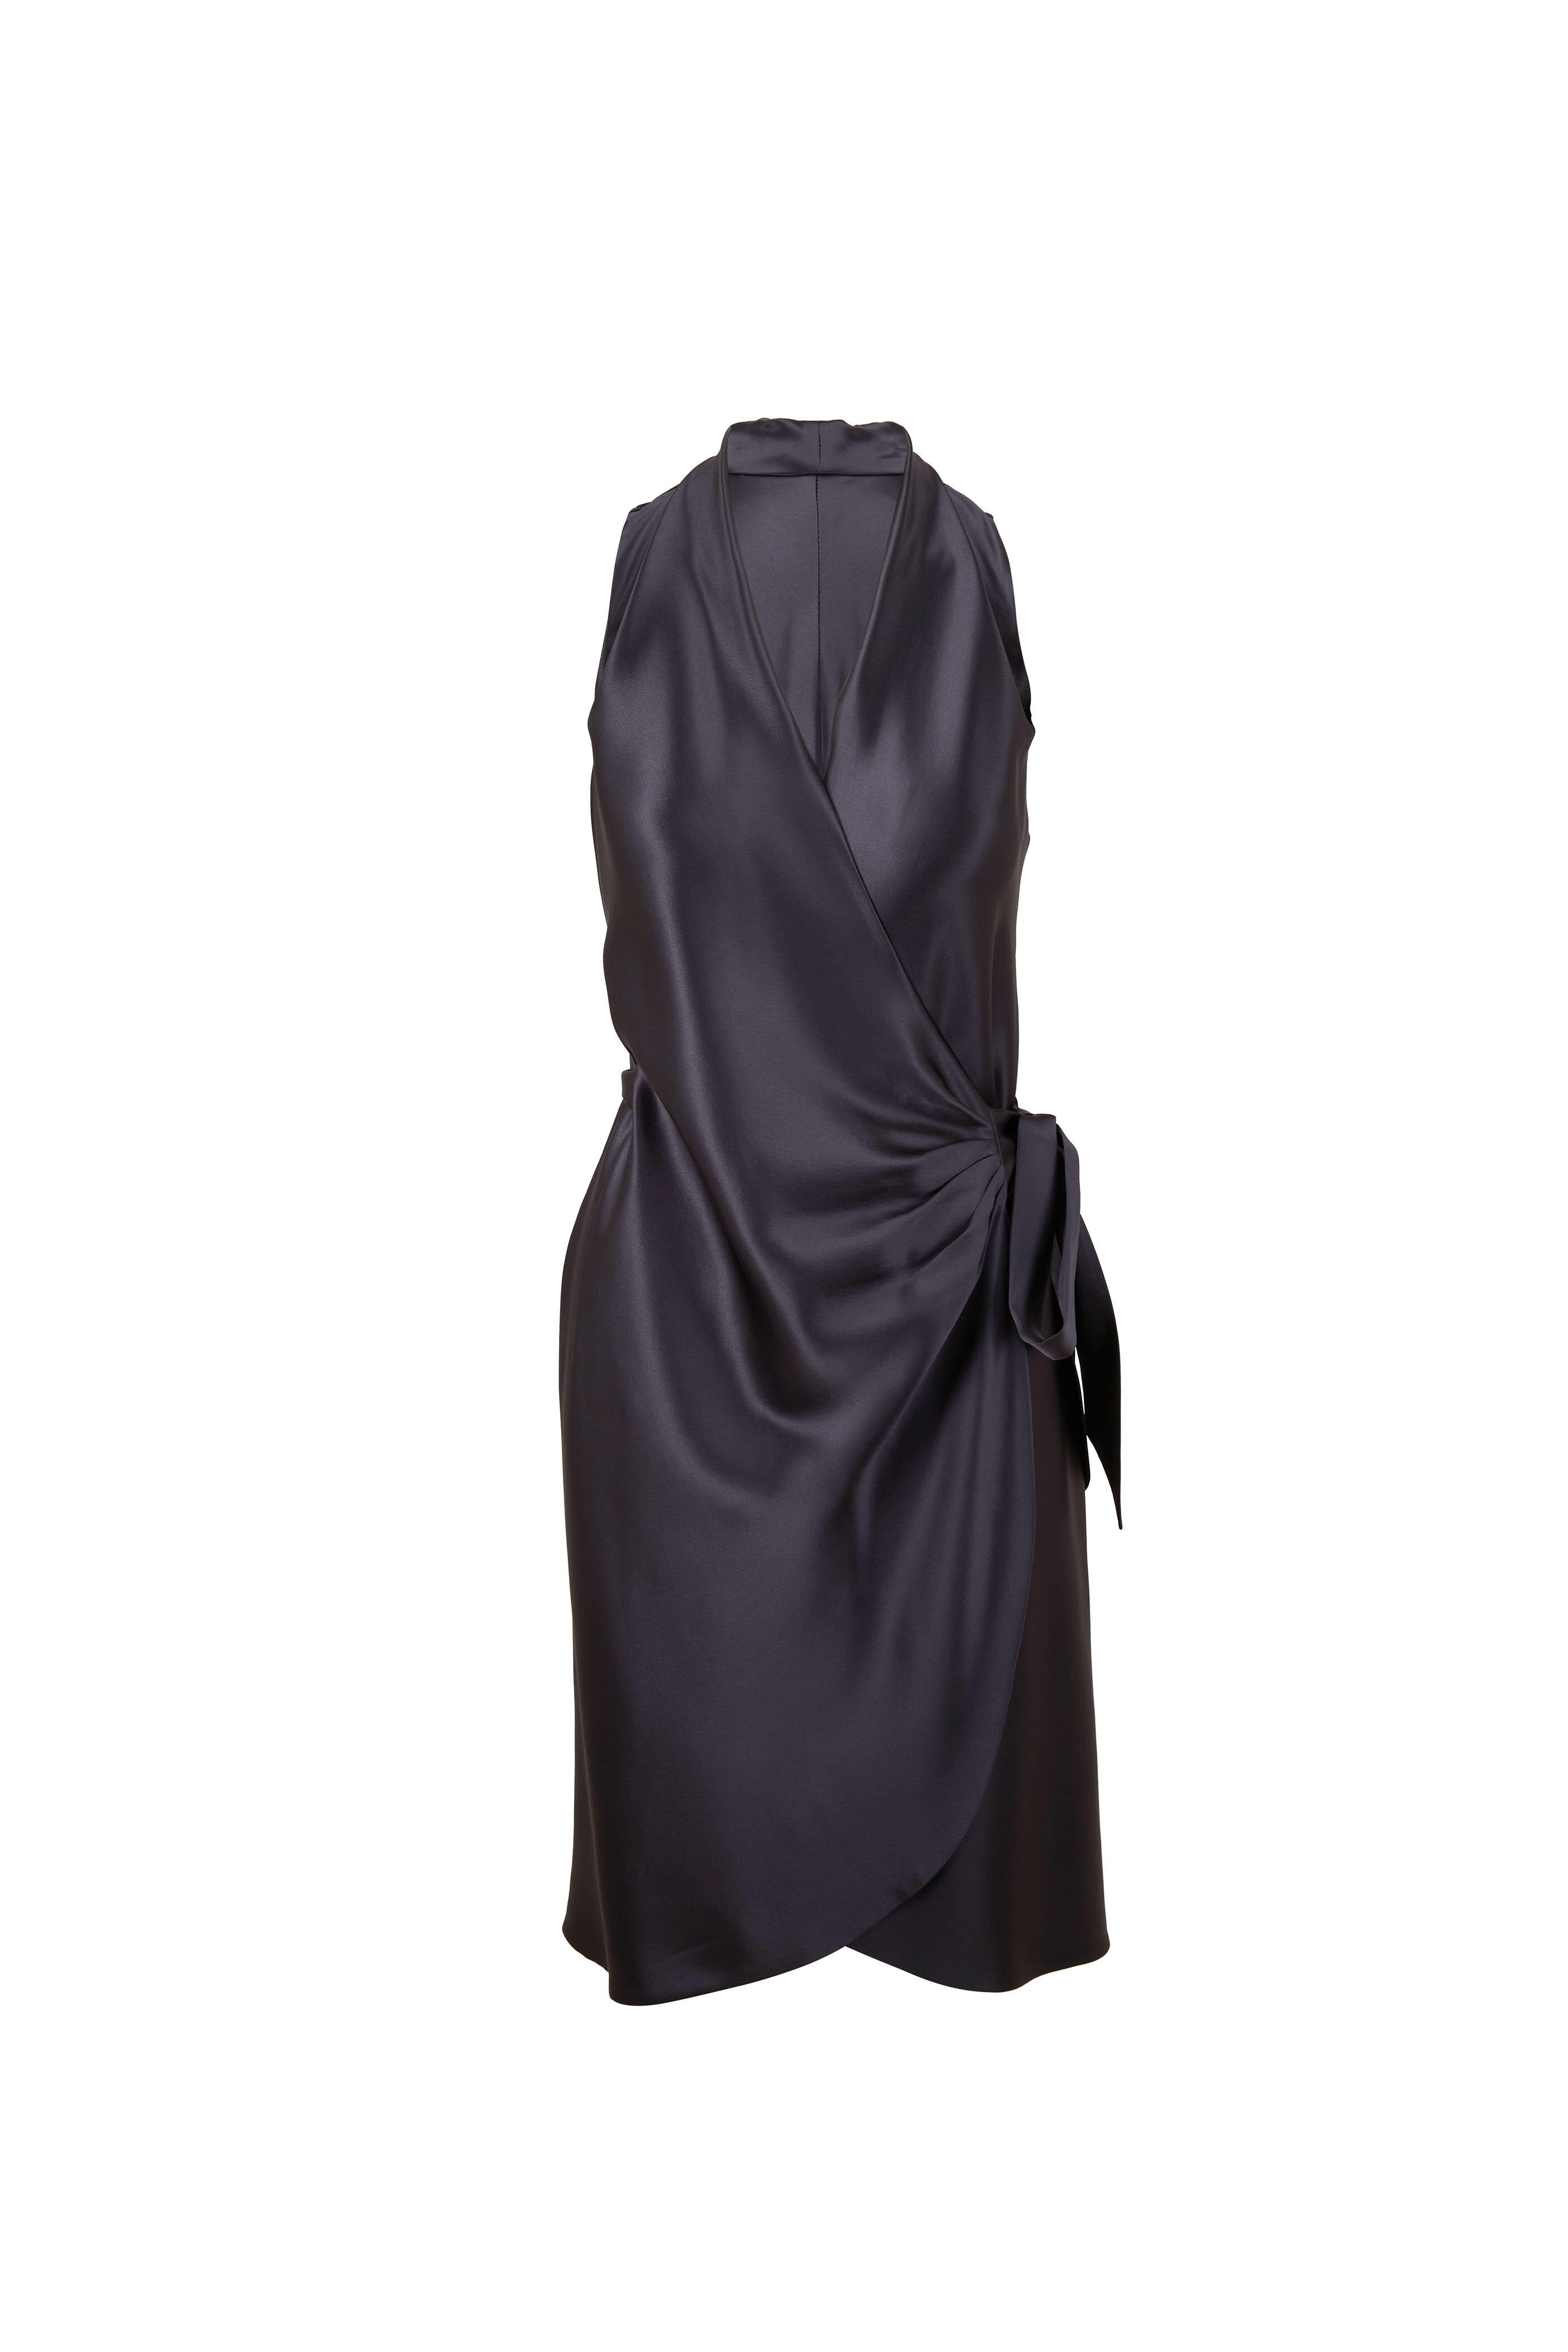 Peter Cohen - Short Stop Slate Silk Wrap Dress | Mitchell Stores